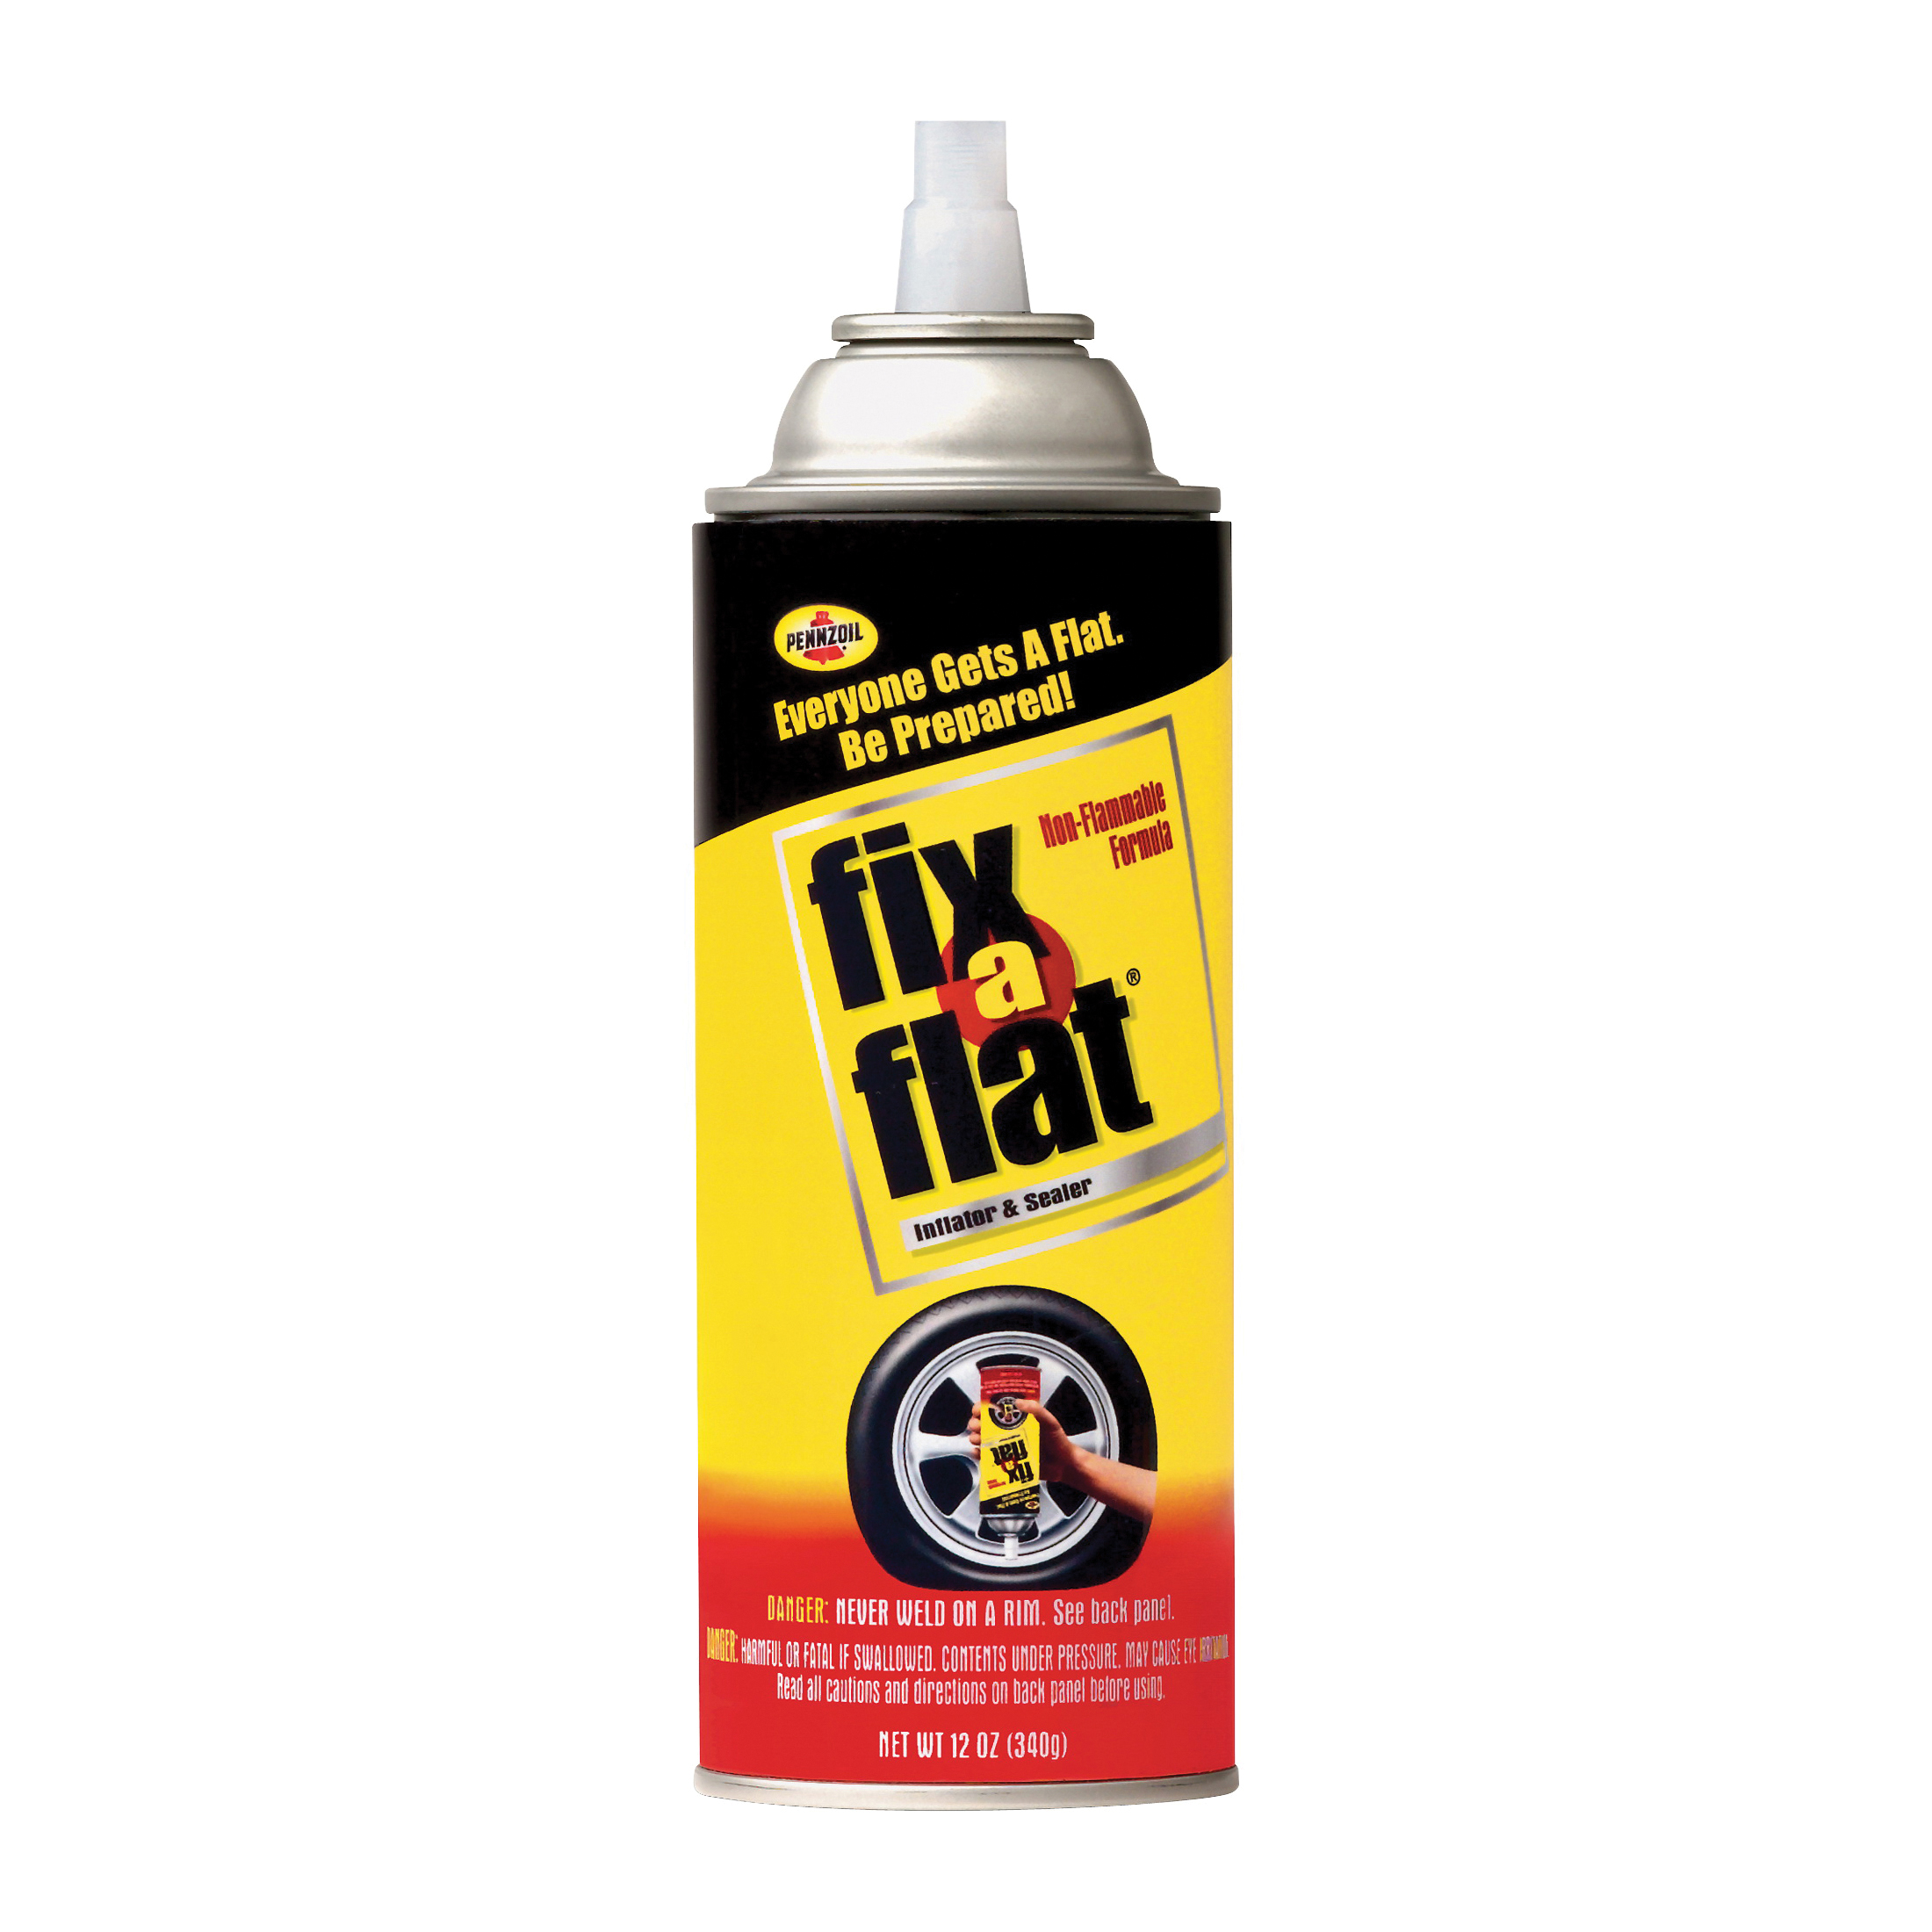 does fix a flat work